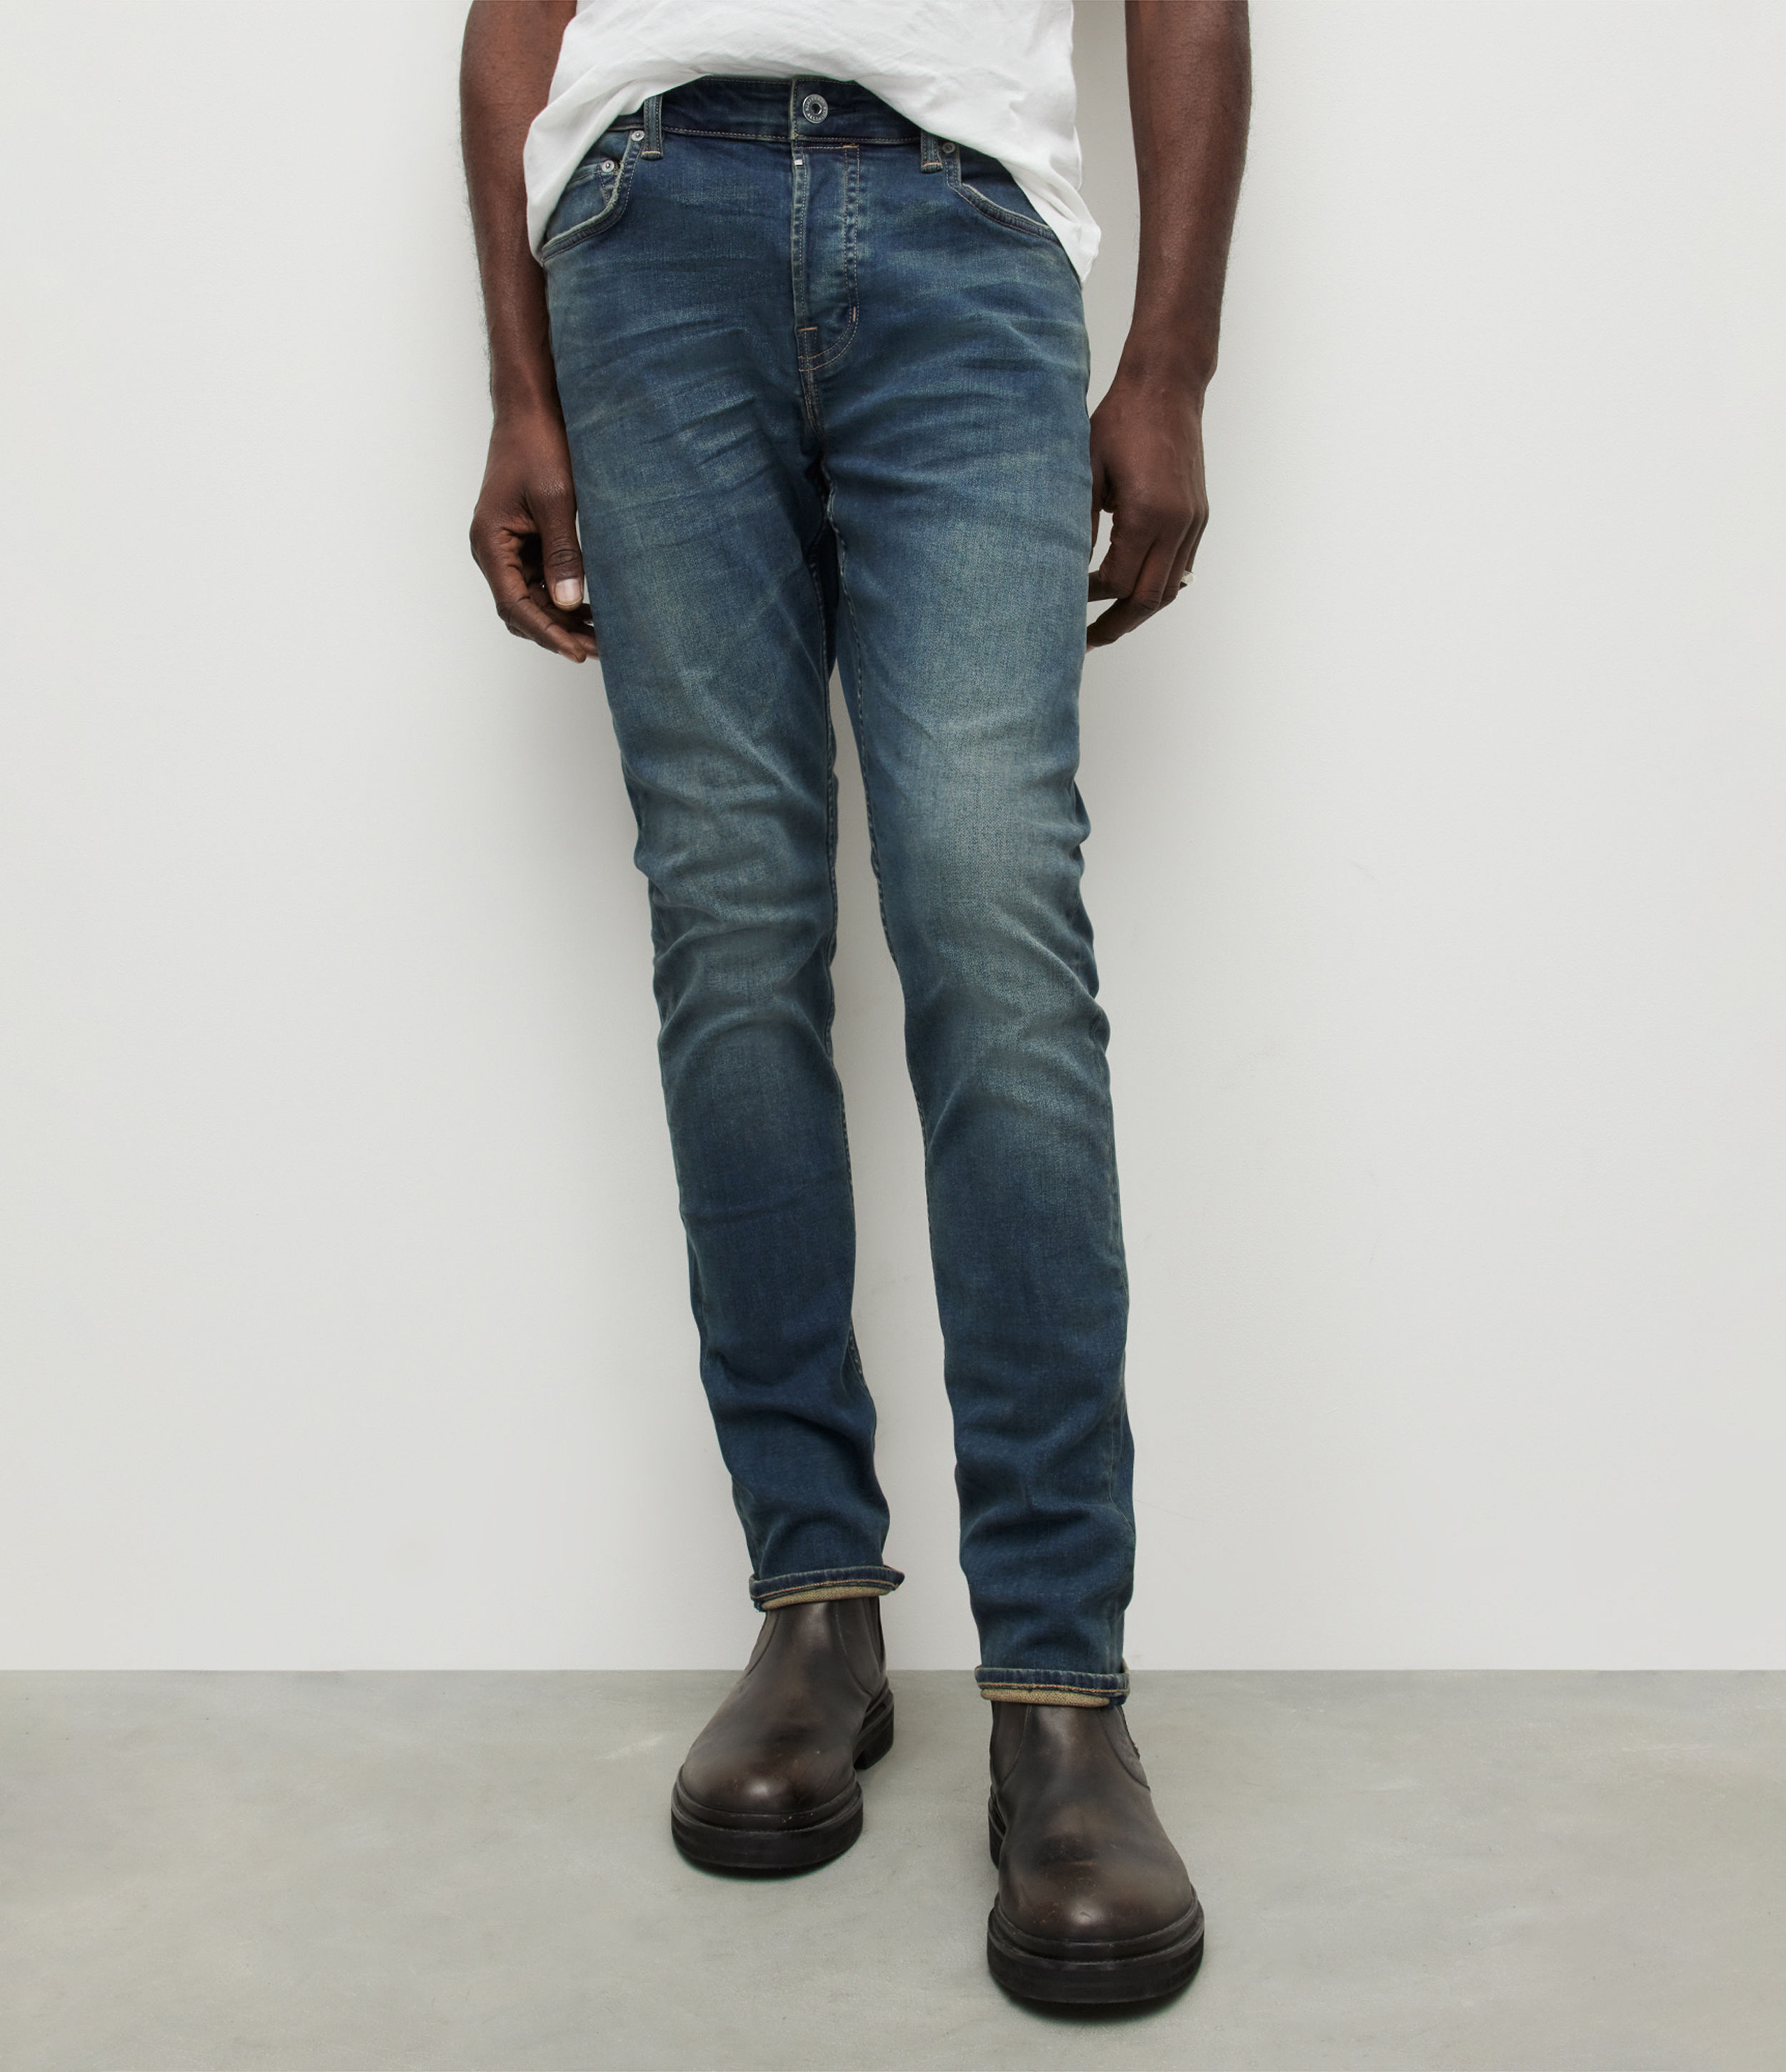 AllSaints Men’s Ronnie Extra Skinny Jeans, Indigo, Size: 38